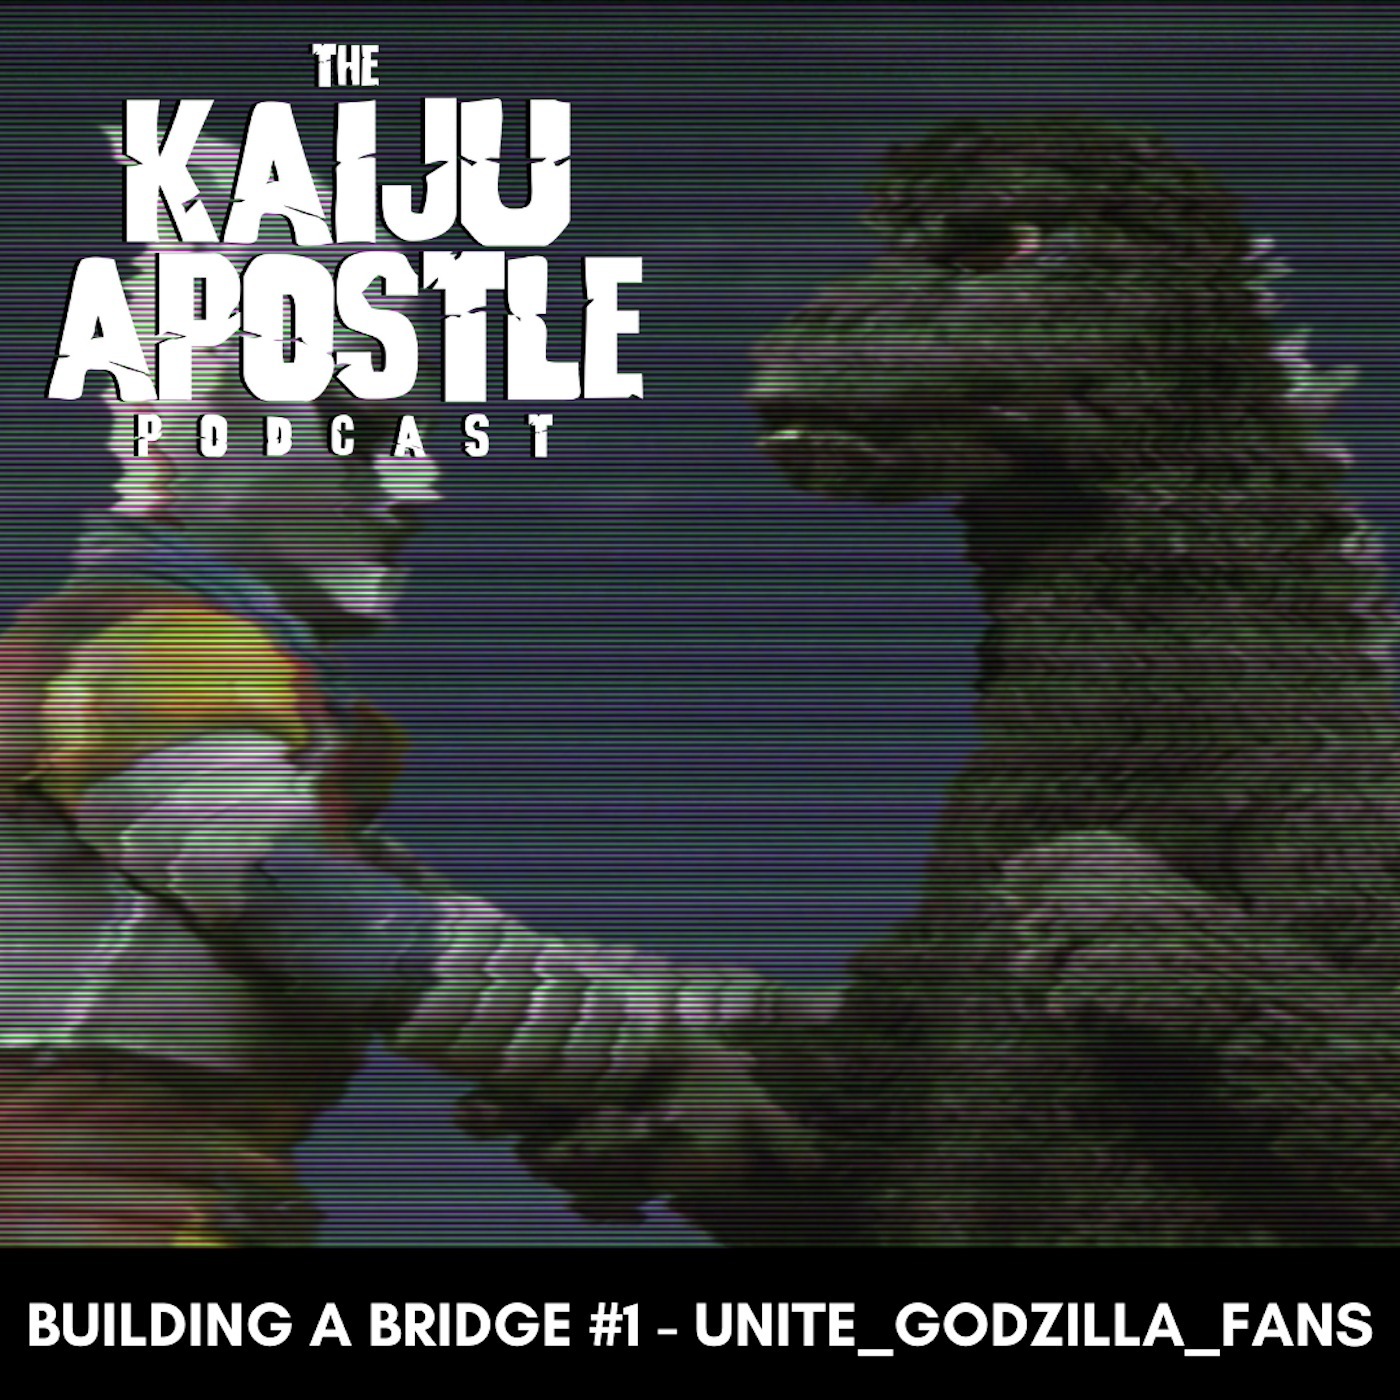 Building a Bridge - Unite_Godzilla_Fans